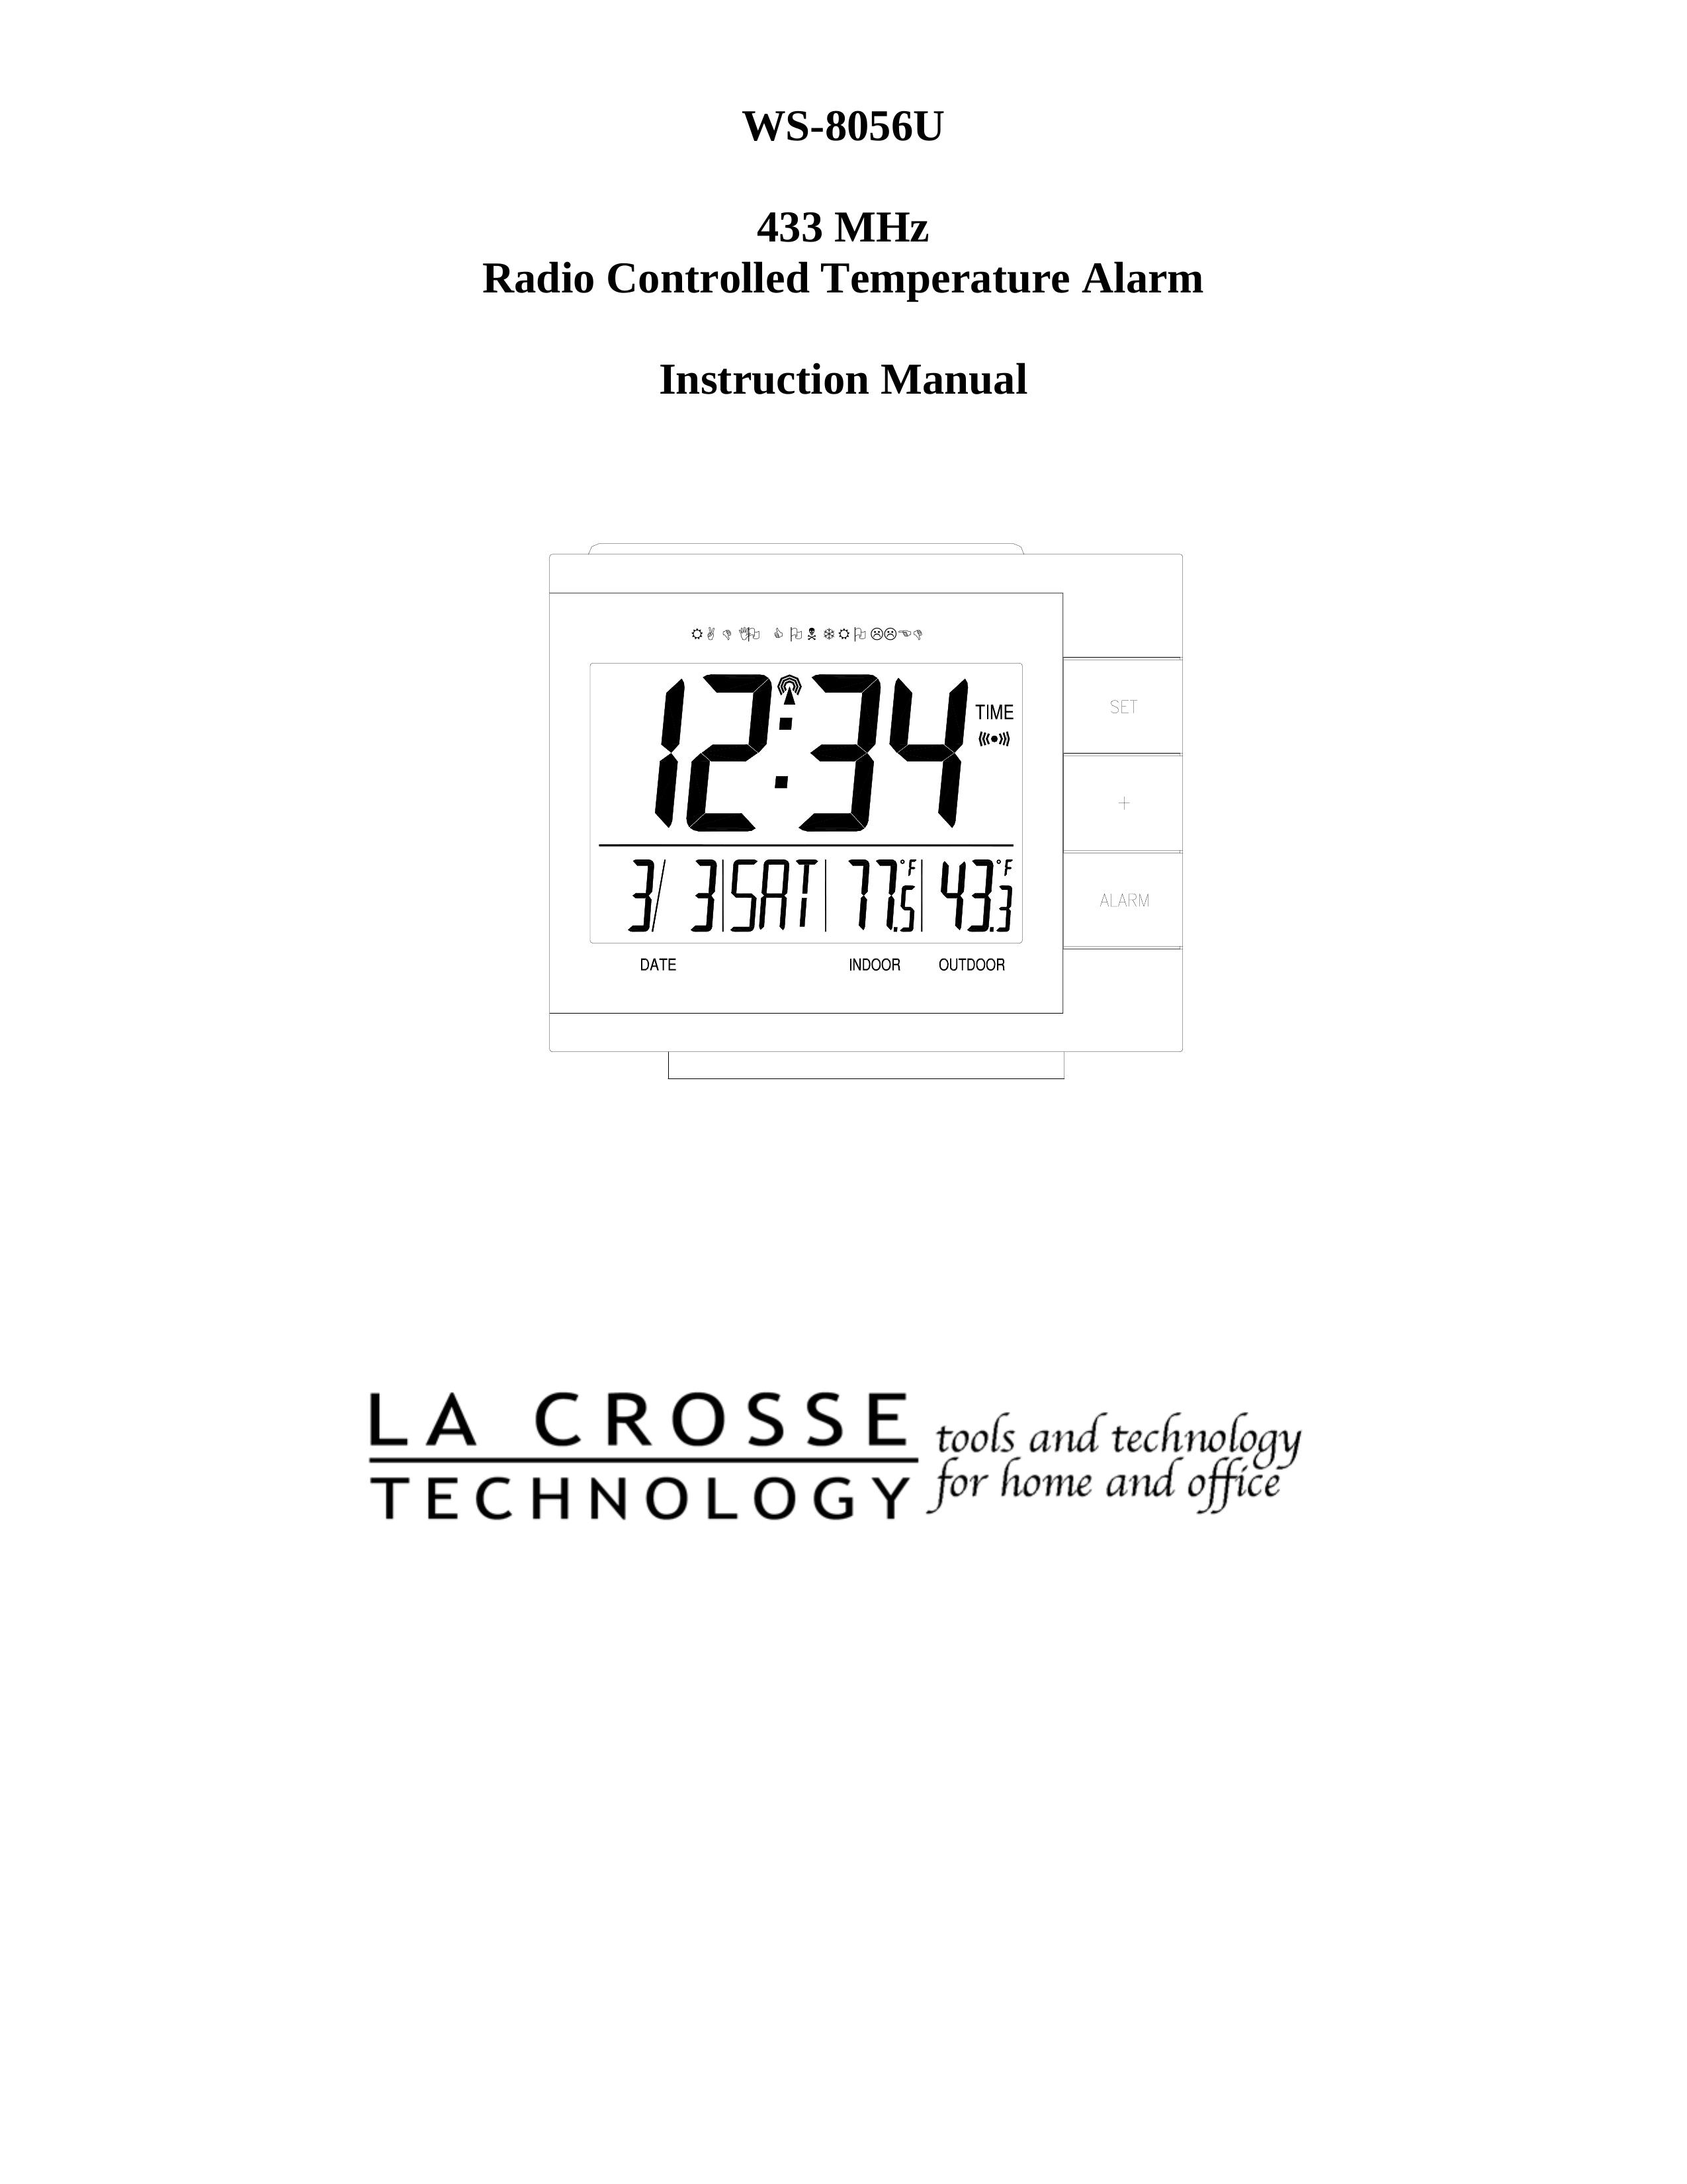 La Crosse Technology WS-8056U Clock Radio User Manual